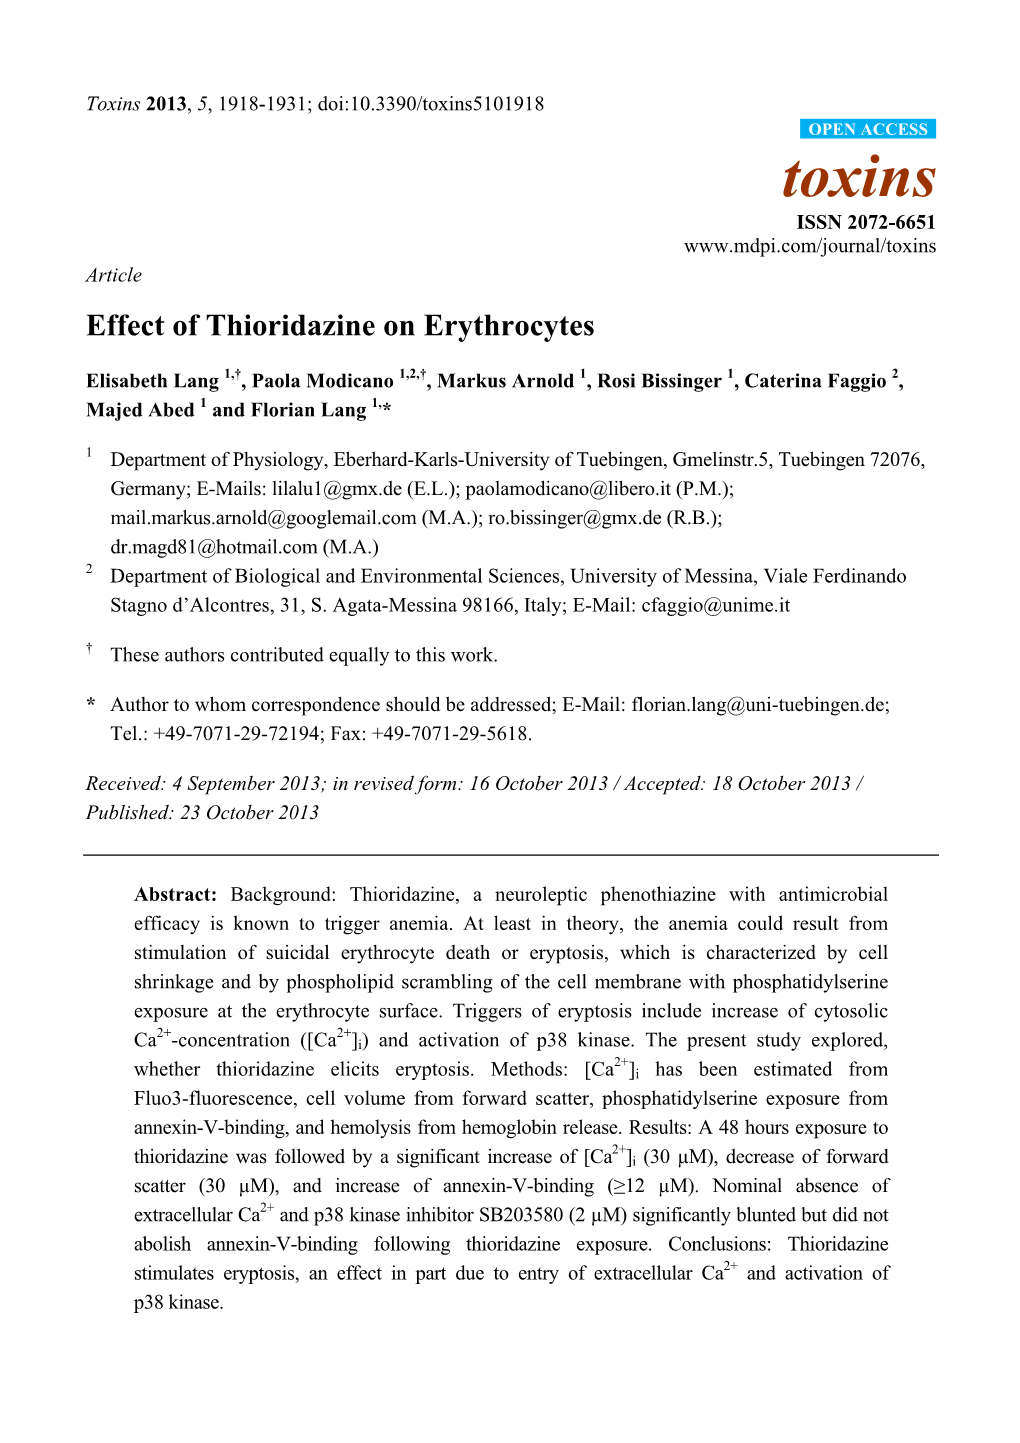 Effect of Thioridazine on Erythrocytes